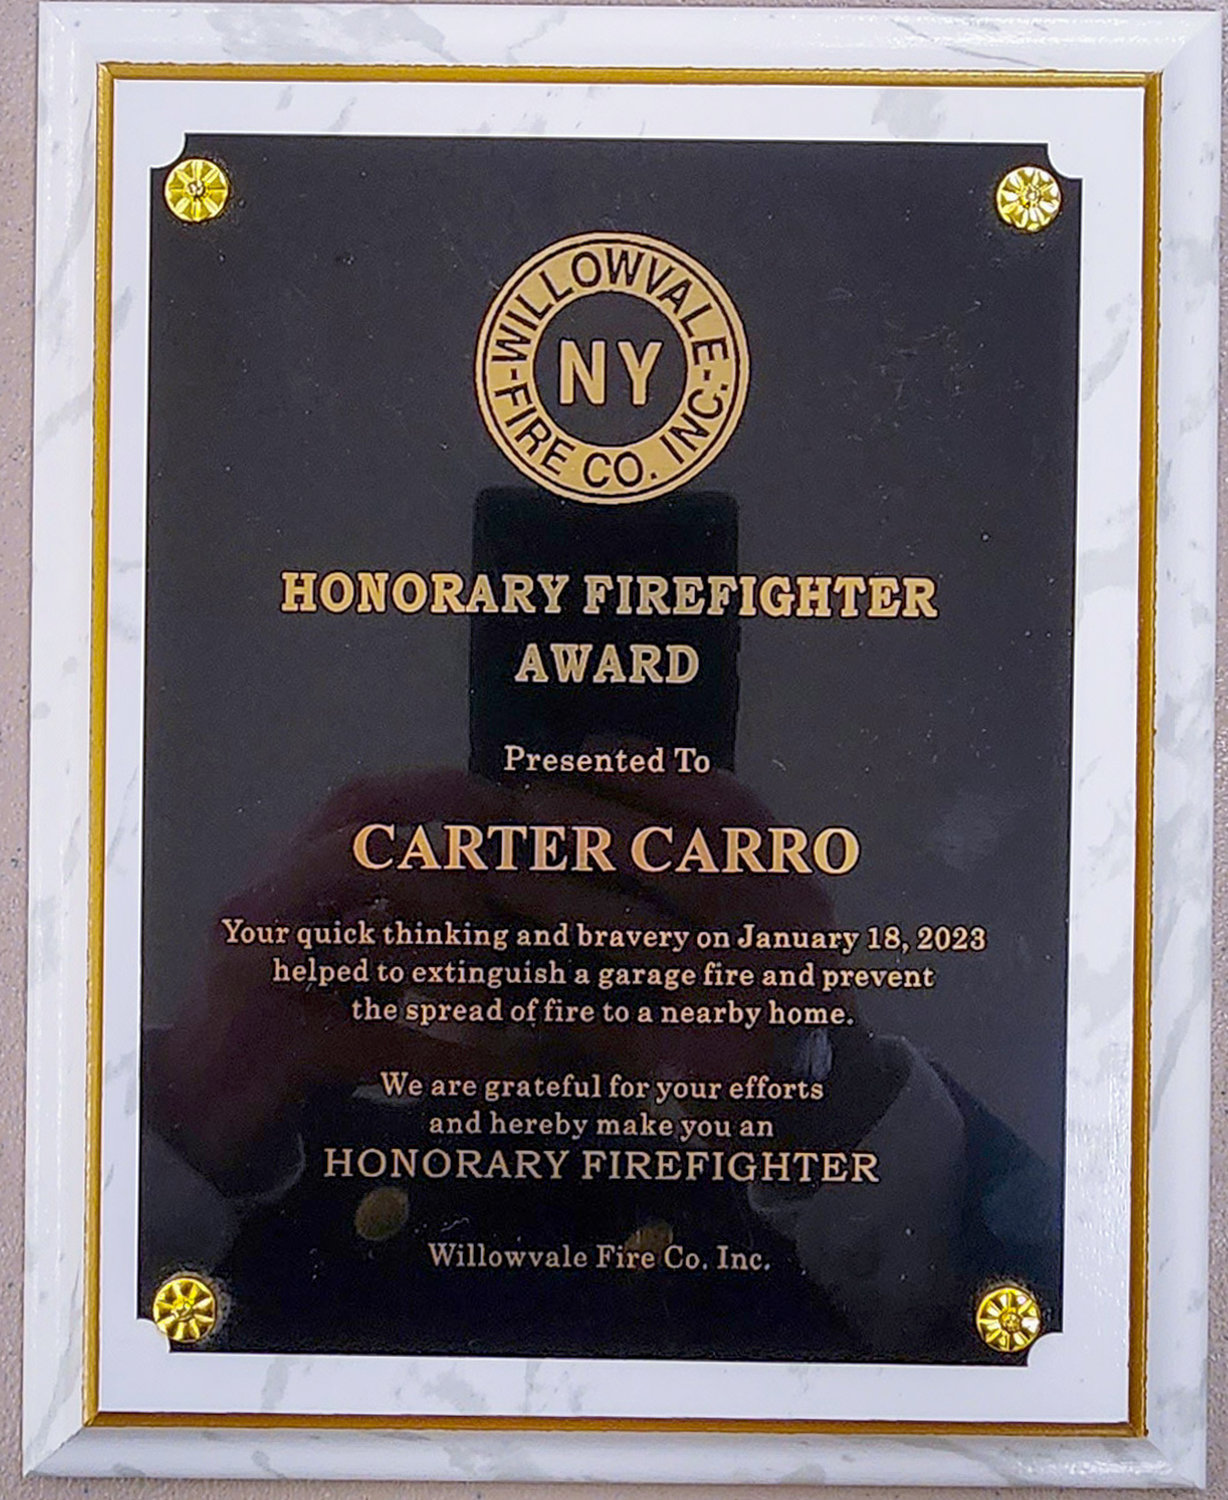 Carter Carro's honorary firefighter award.